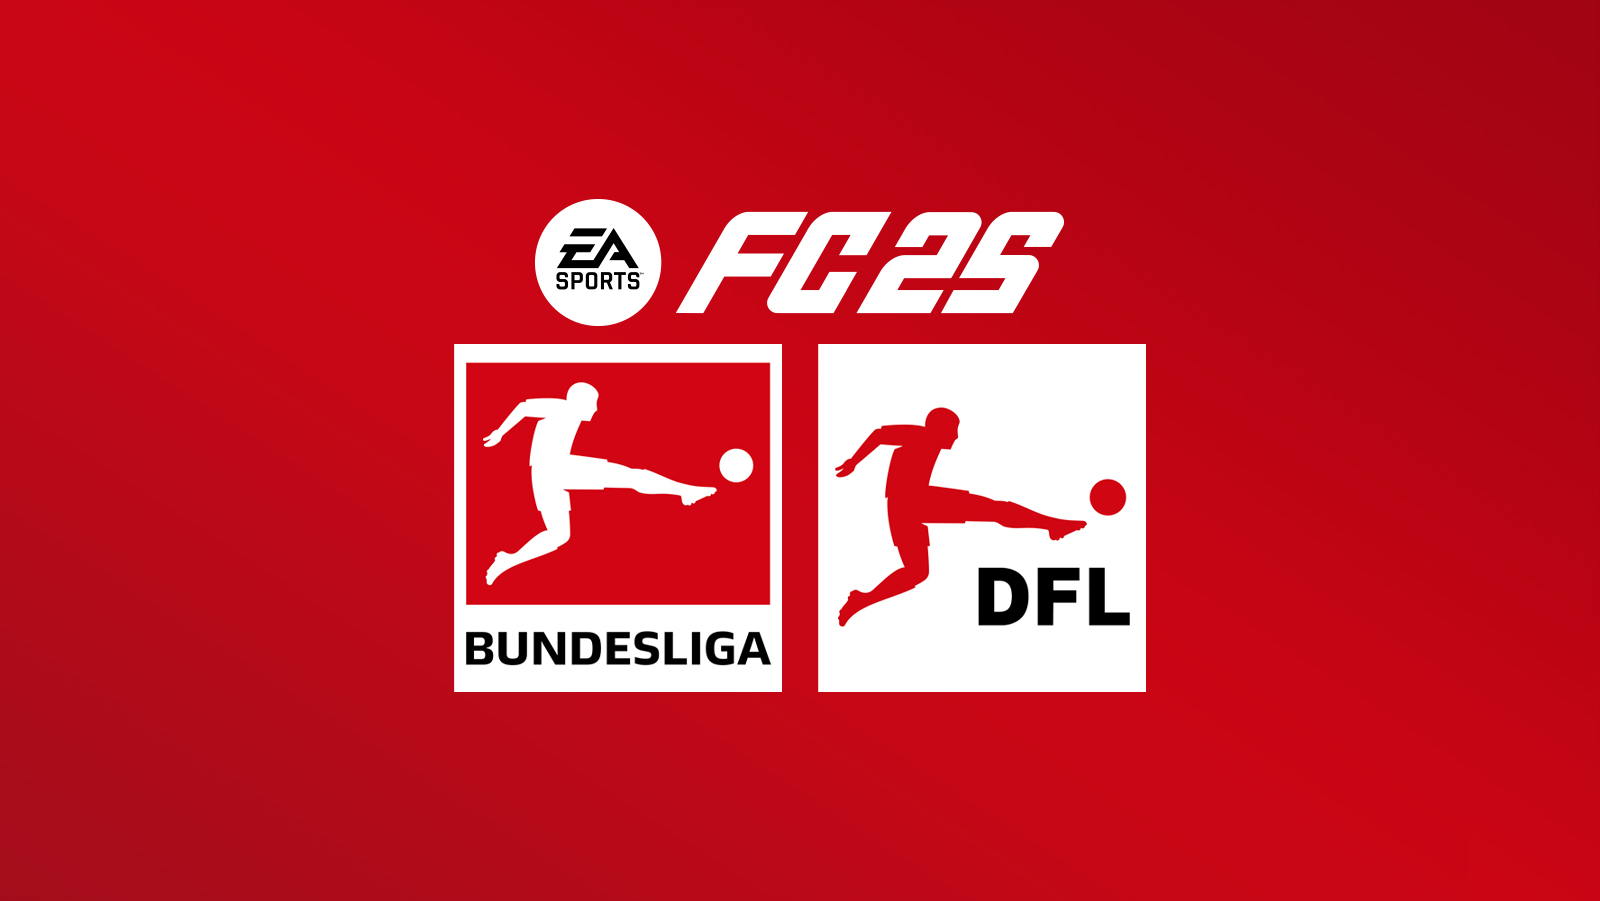 EA Sports FC 25 DFL and Bundesliga